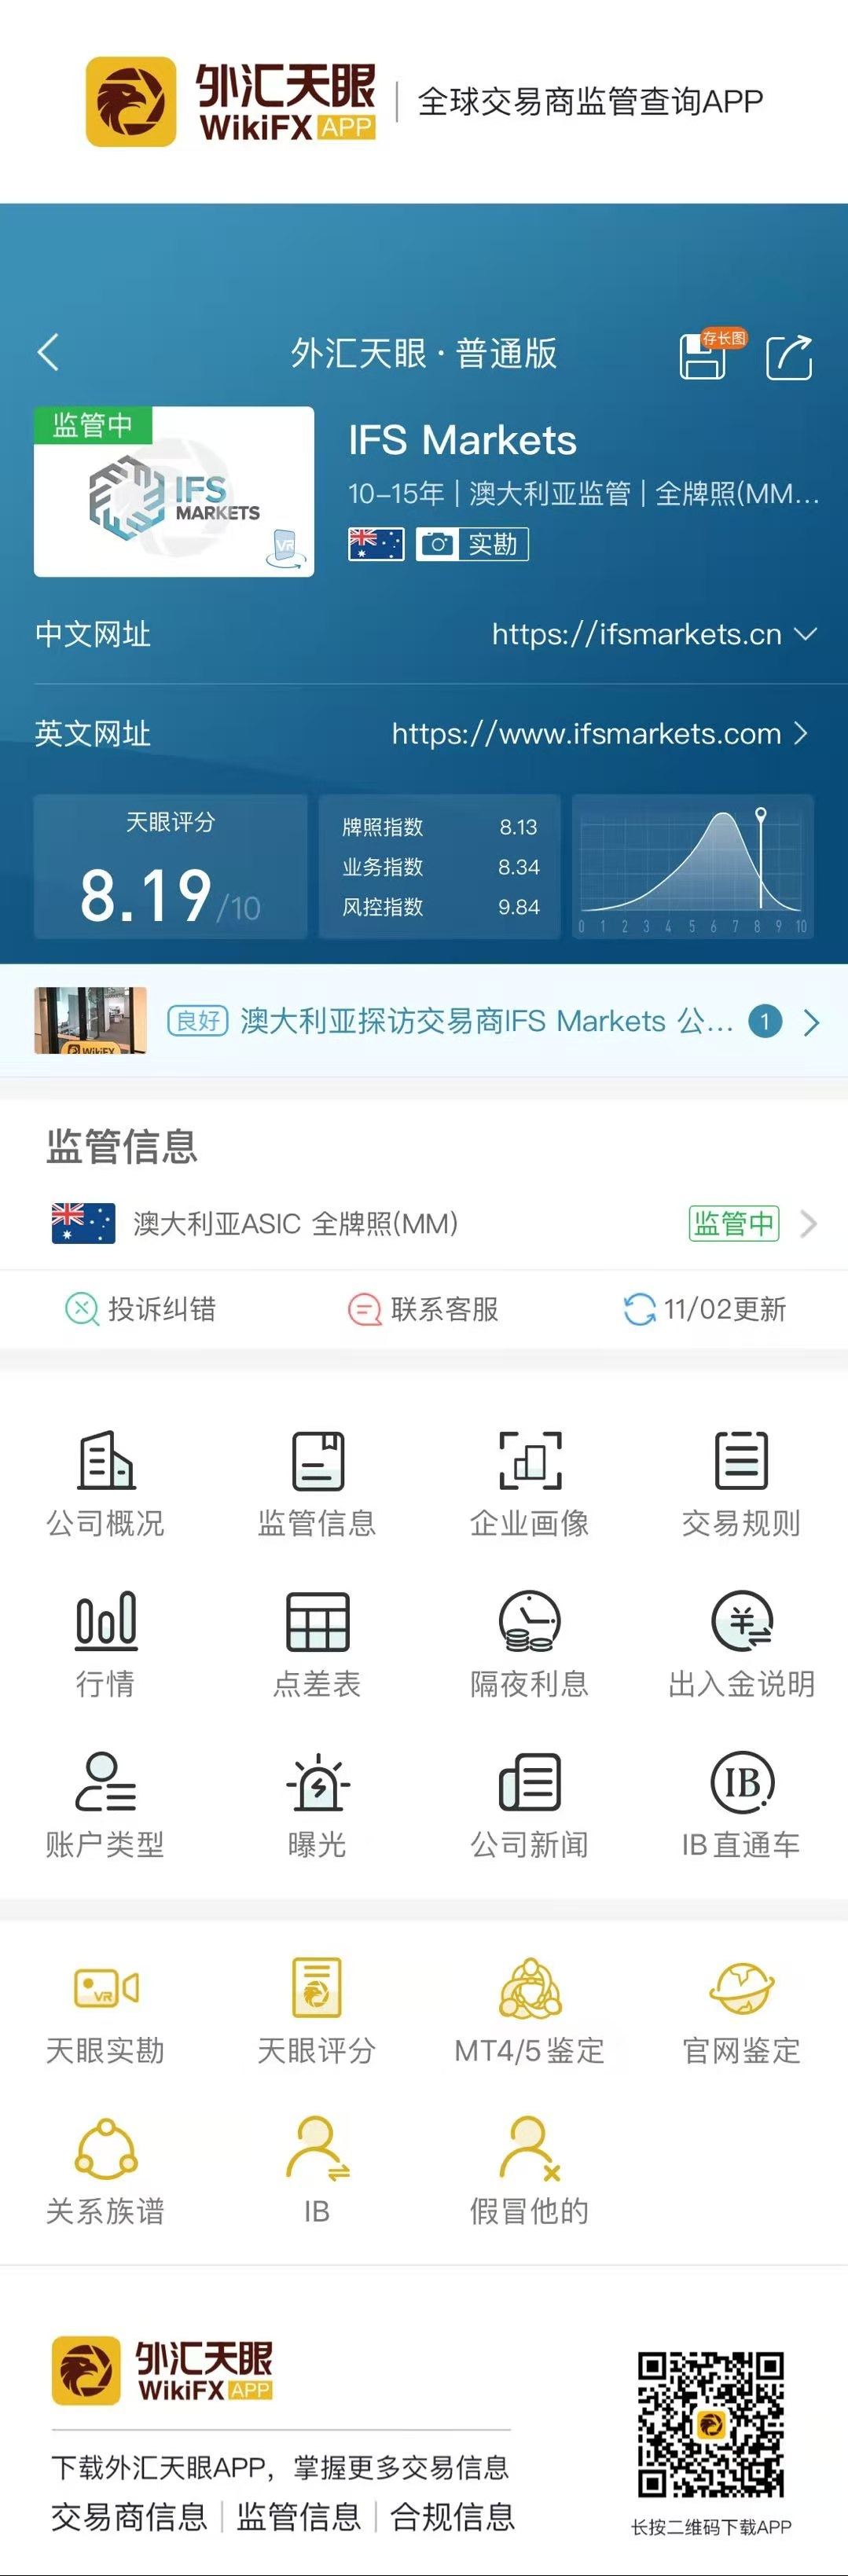 HangzhouIFSForeign exchange platform investment agency gold50return3591 / author:wallstreetpigs / PostsID:1583984